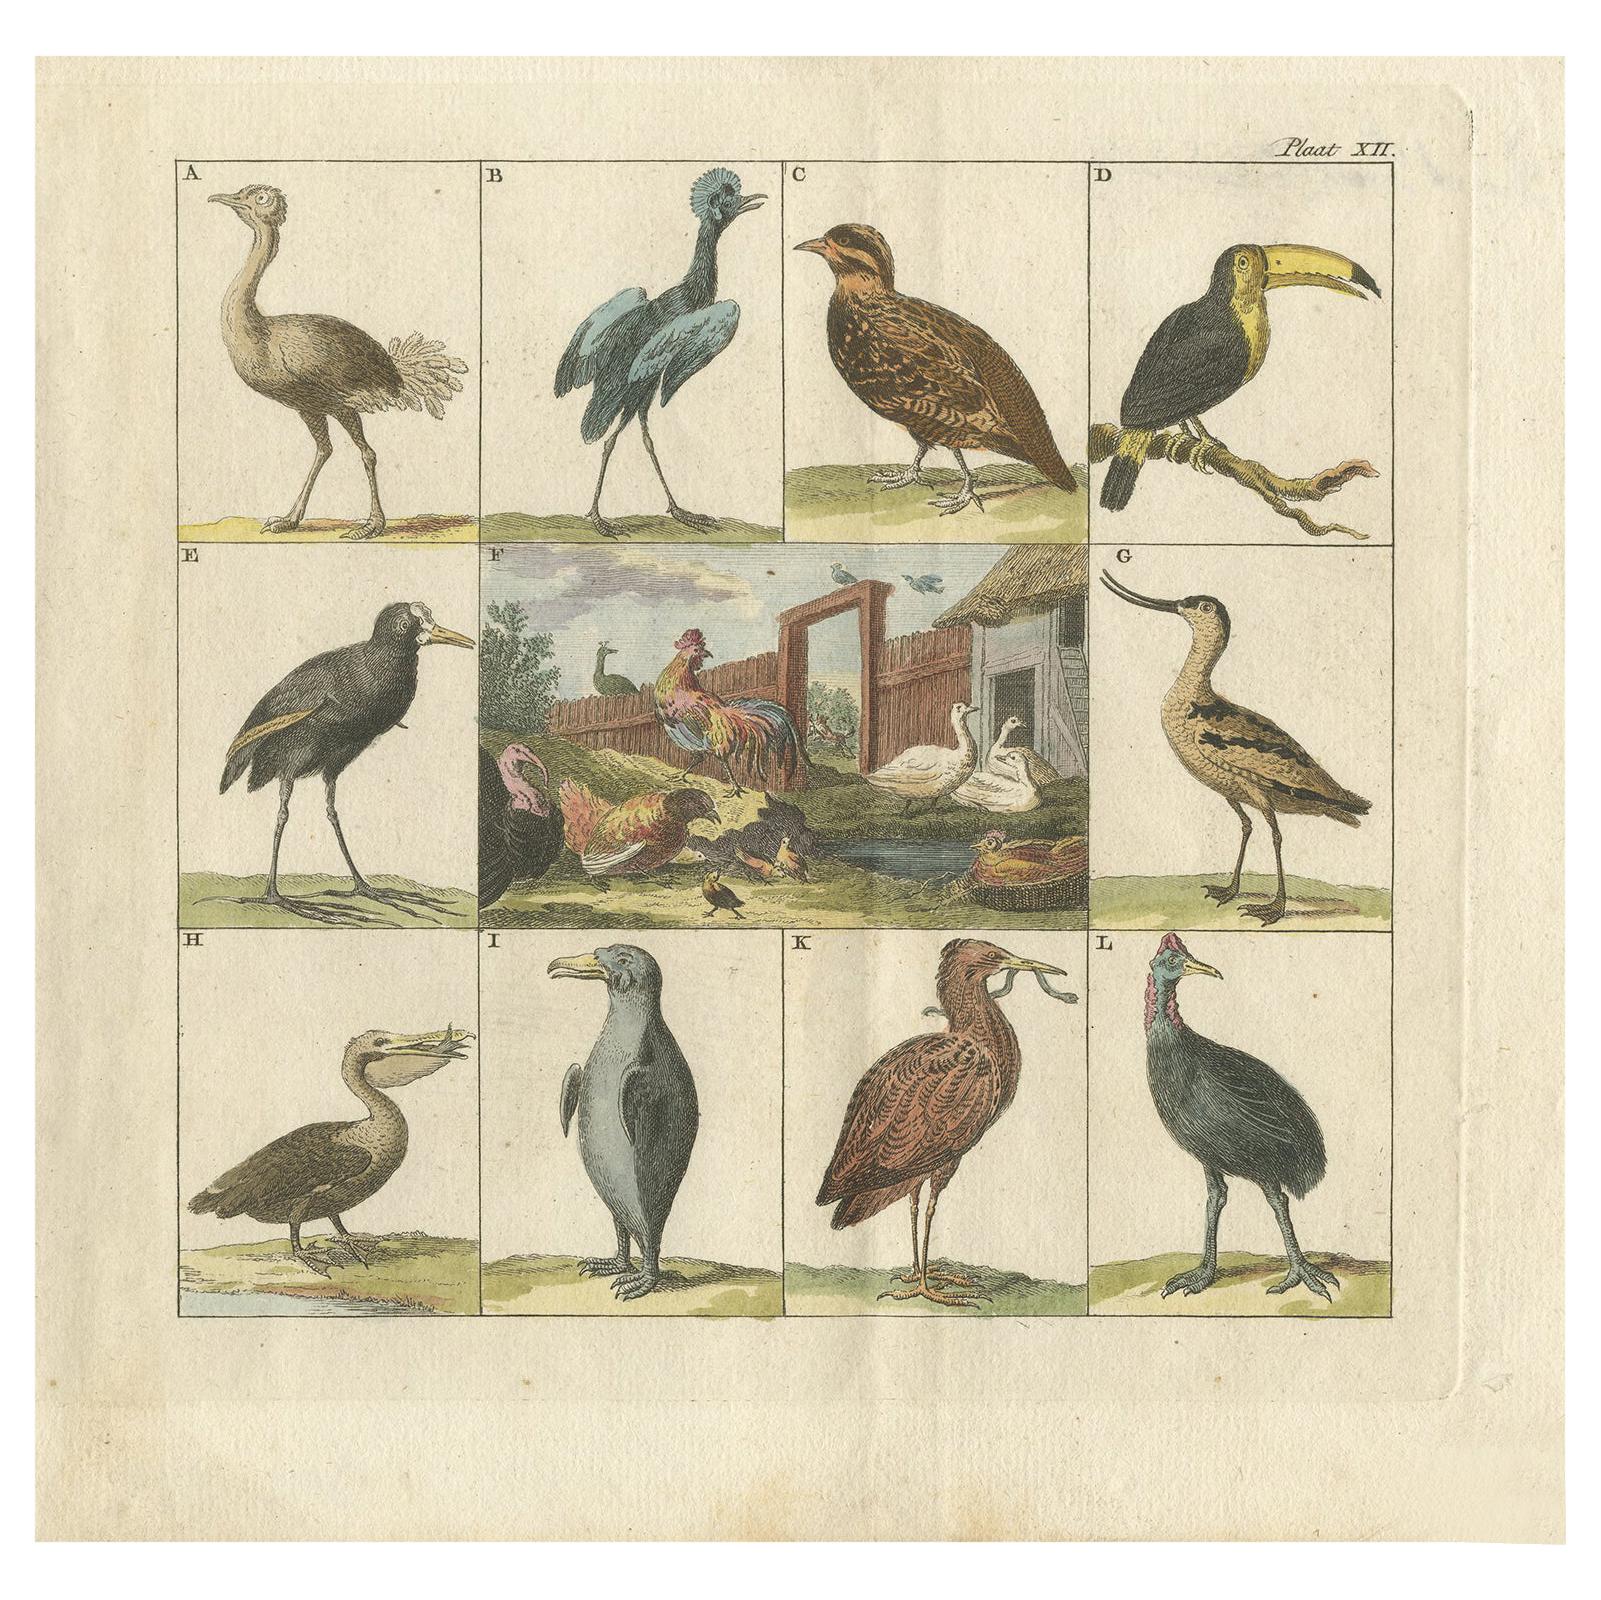 Antique Bird Print of an Ostrich, Toucan, Pelican and Other Birds, 1808